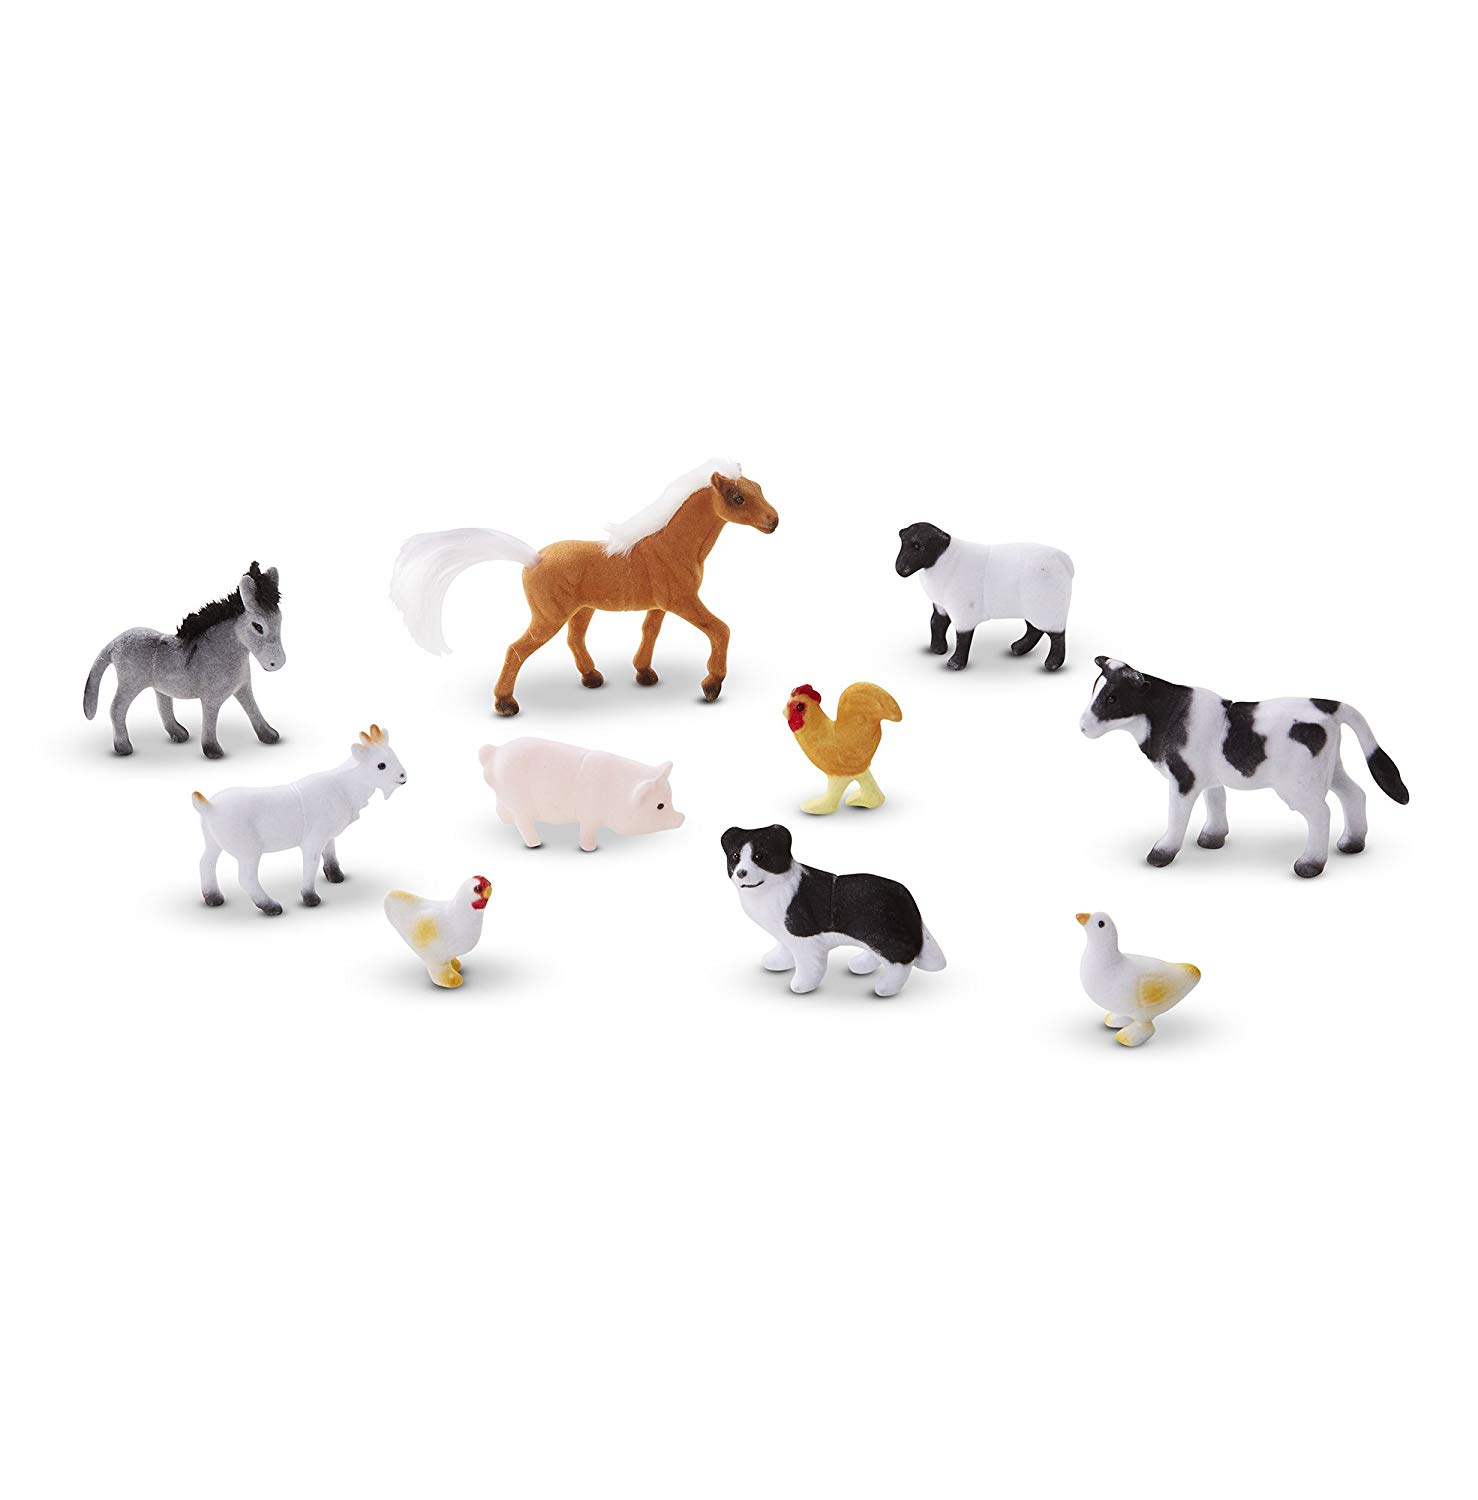 Melissa & Doug 10594 Farm Friends Collectible Toy Animal Figurines (Set of 